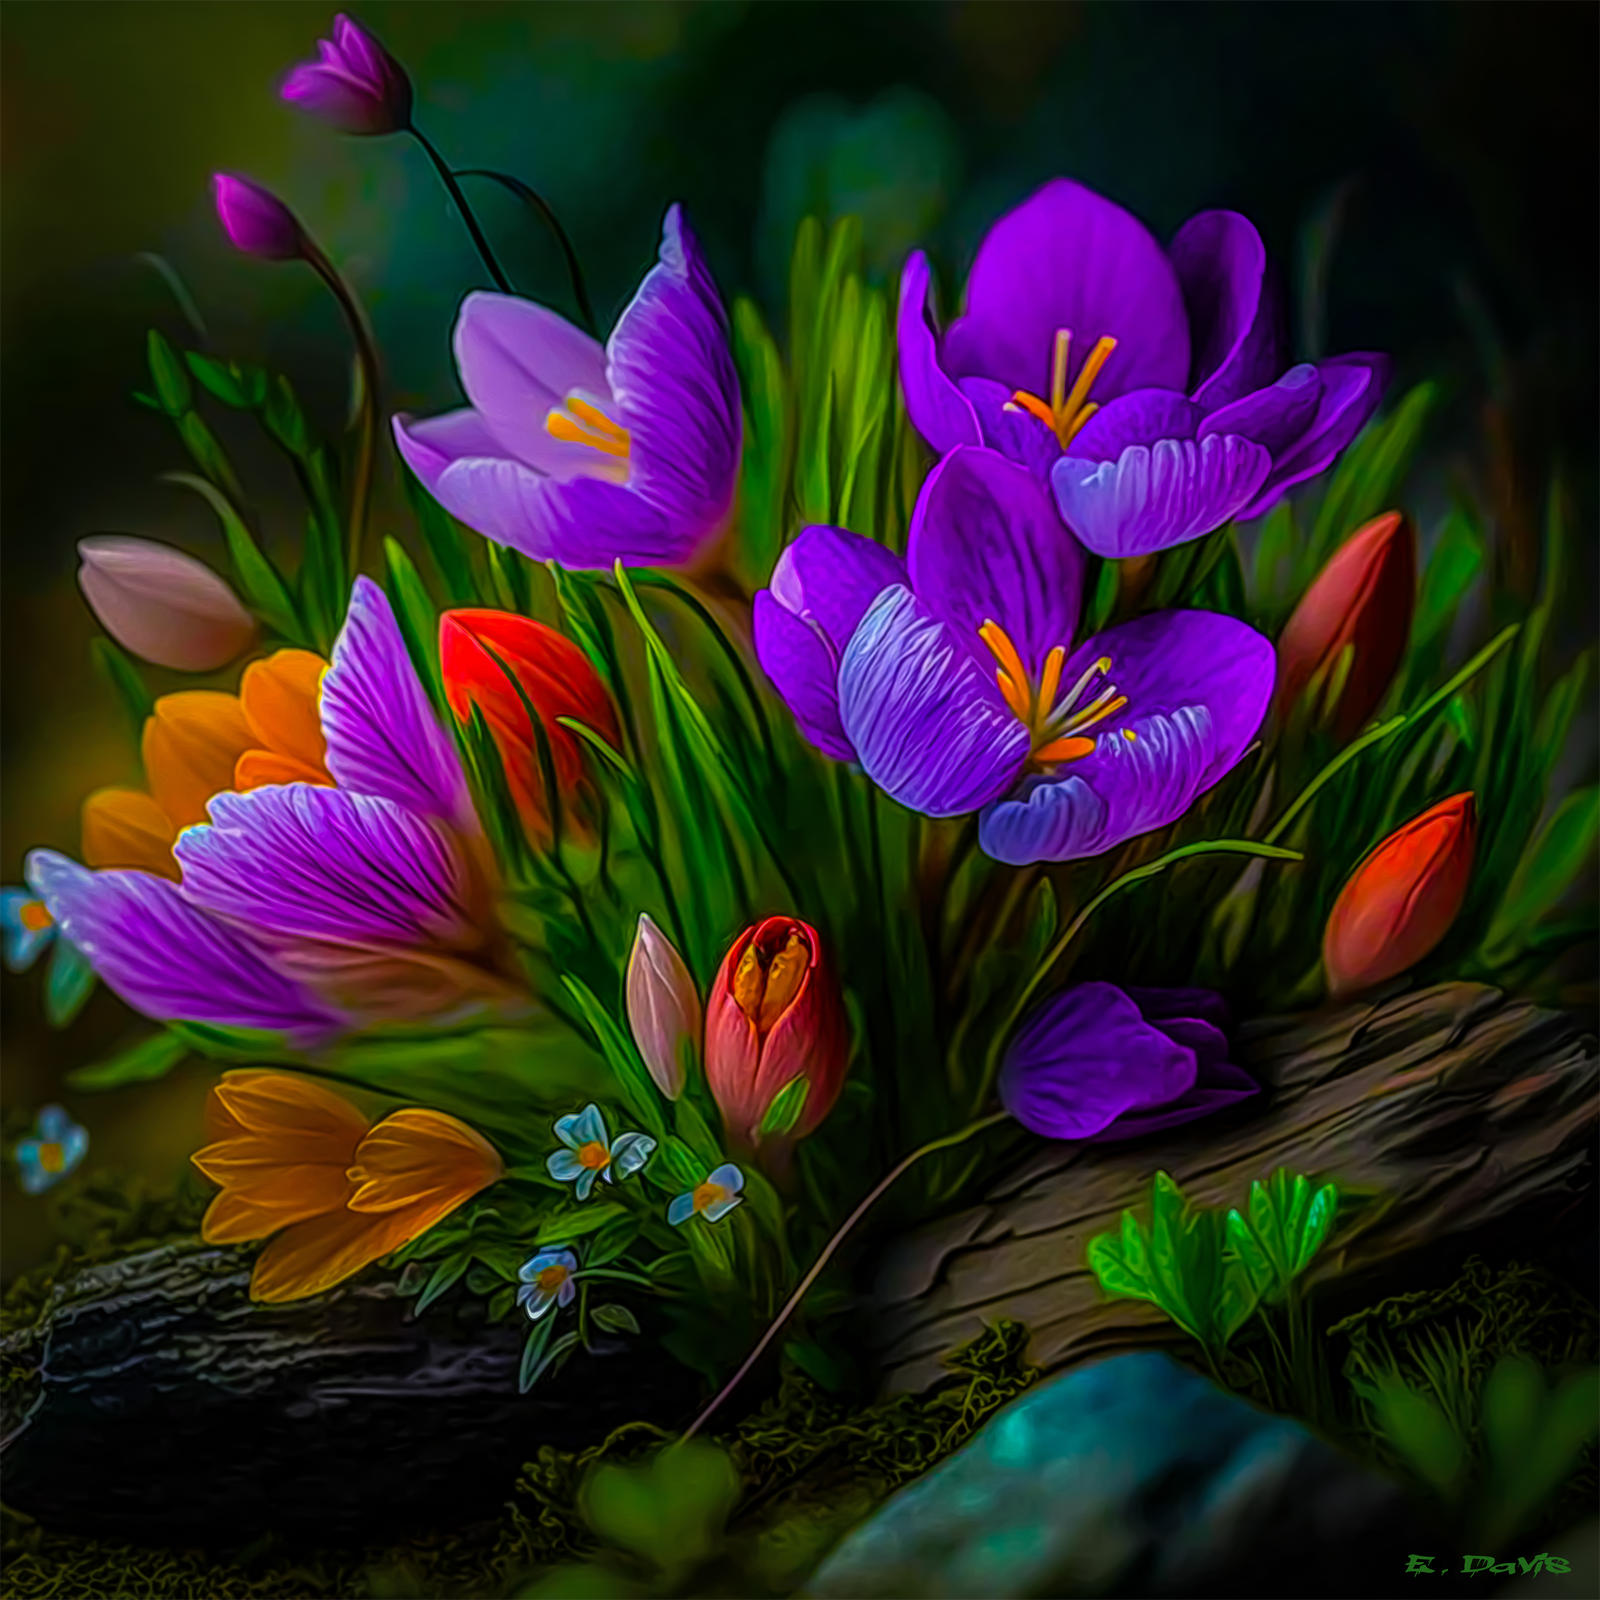 Spring Flowers by EthanDavis01 on DeviantArt